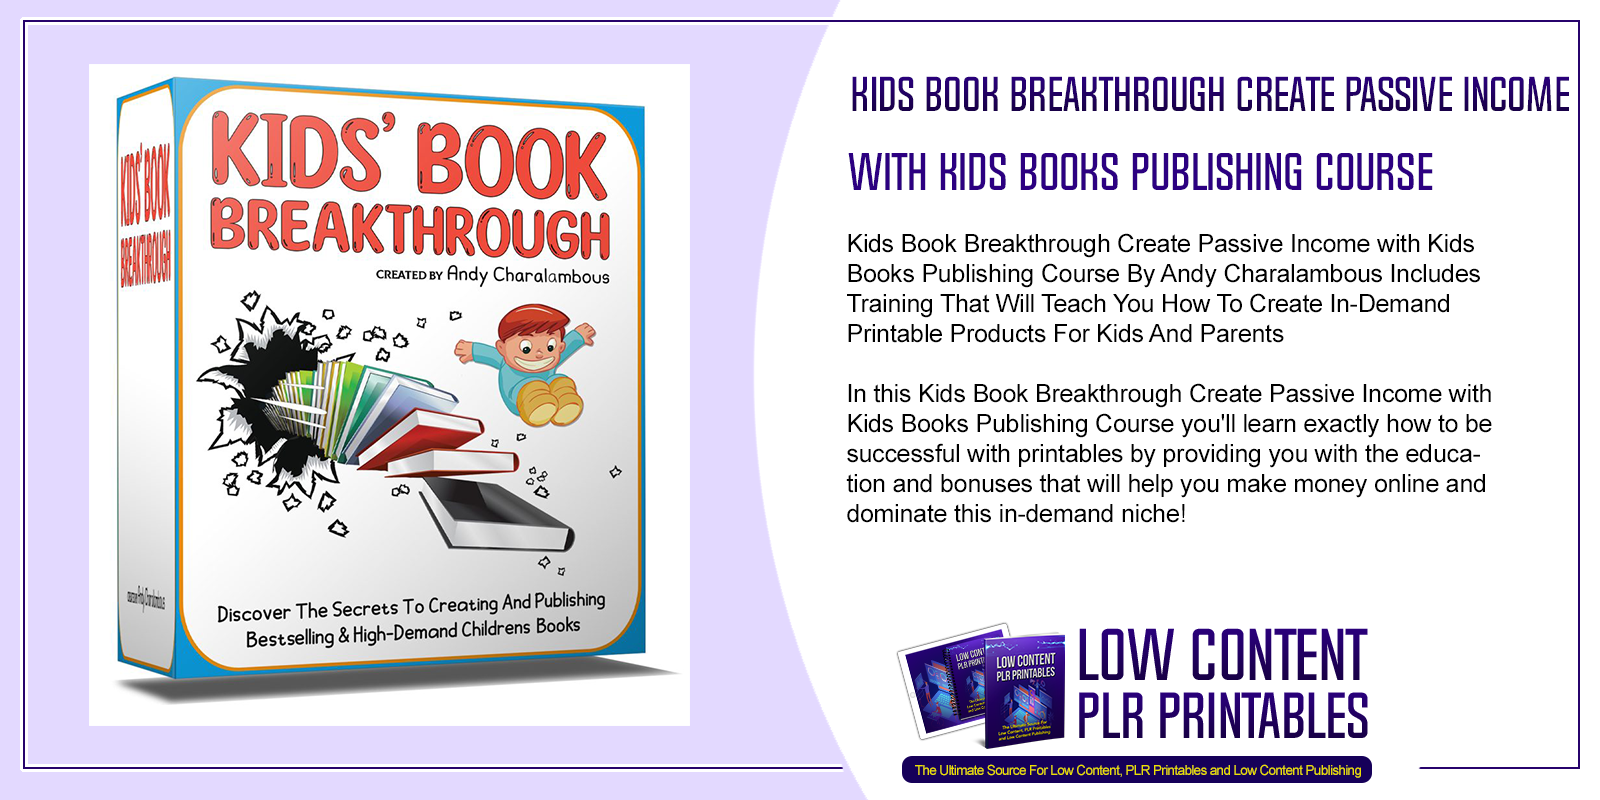 Kids Book Breakthrough Create Passive Income with Kids Books Publishing Course